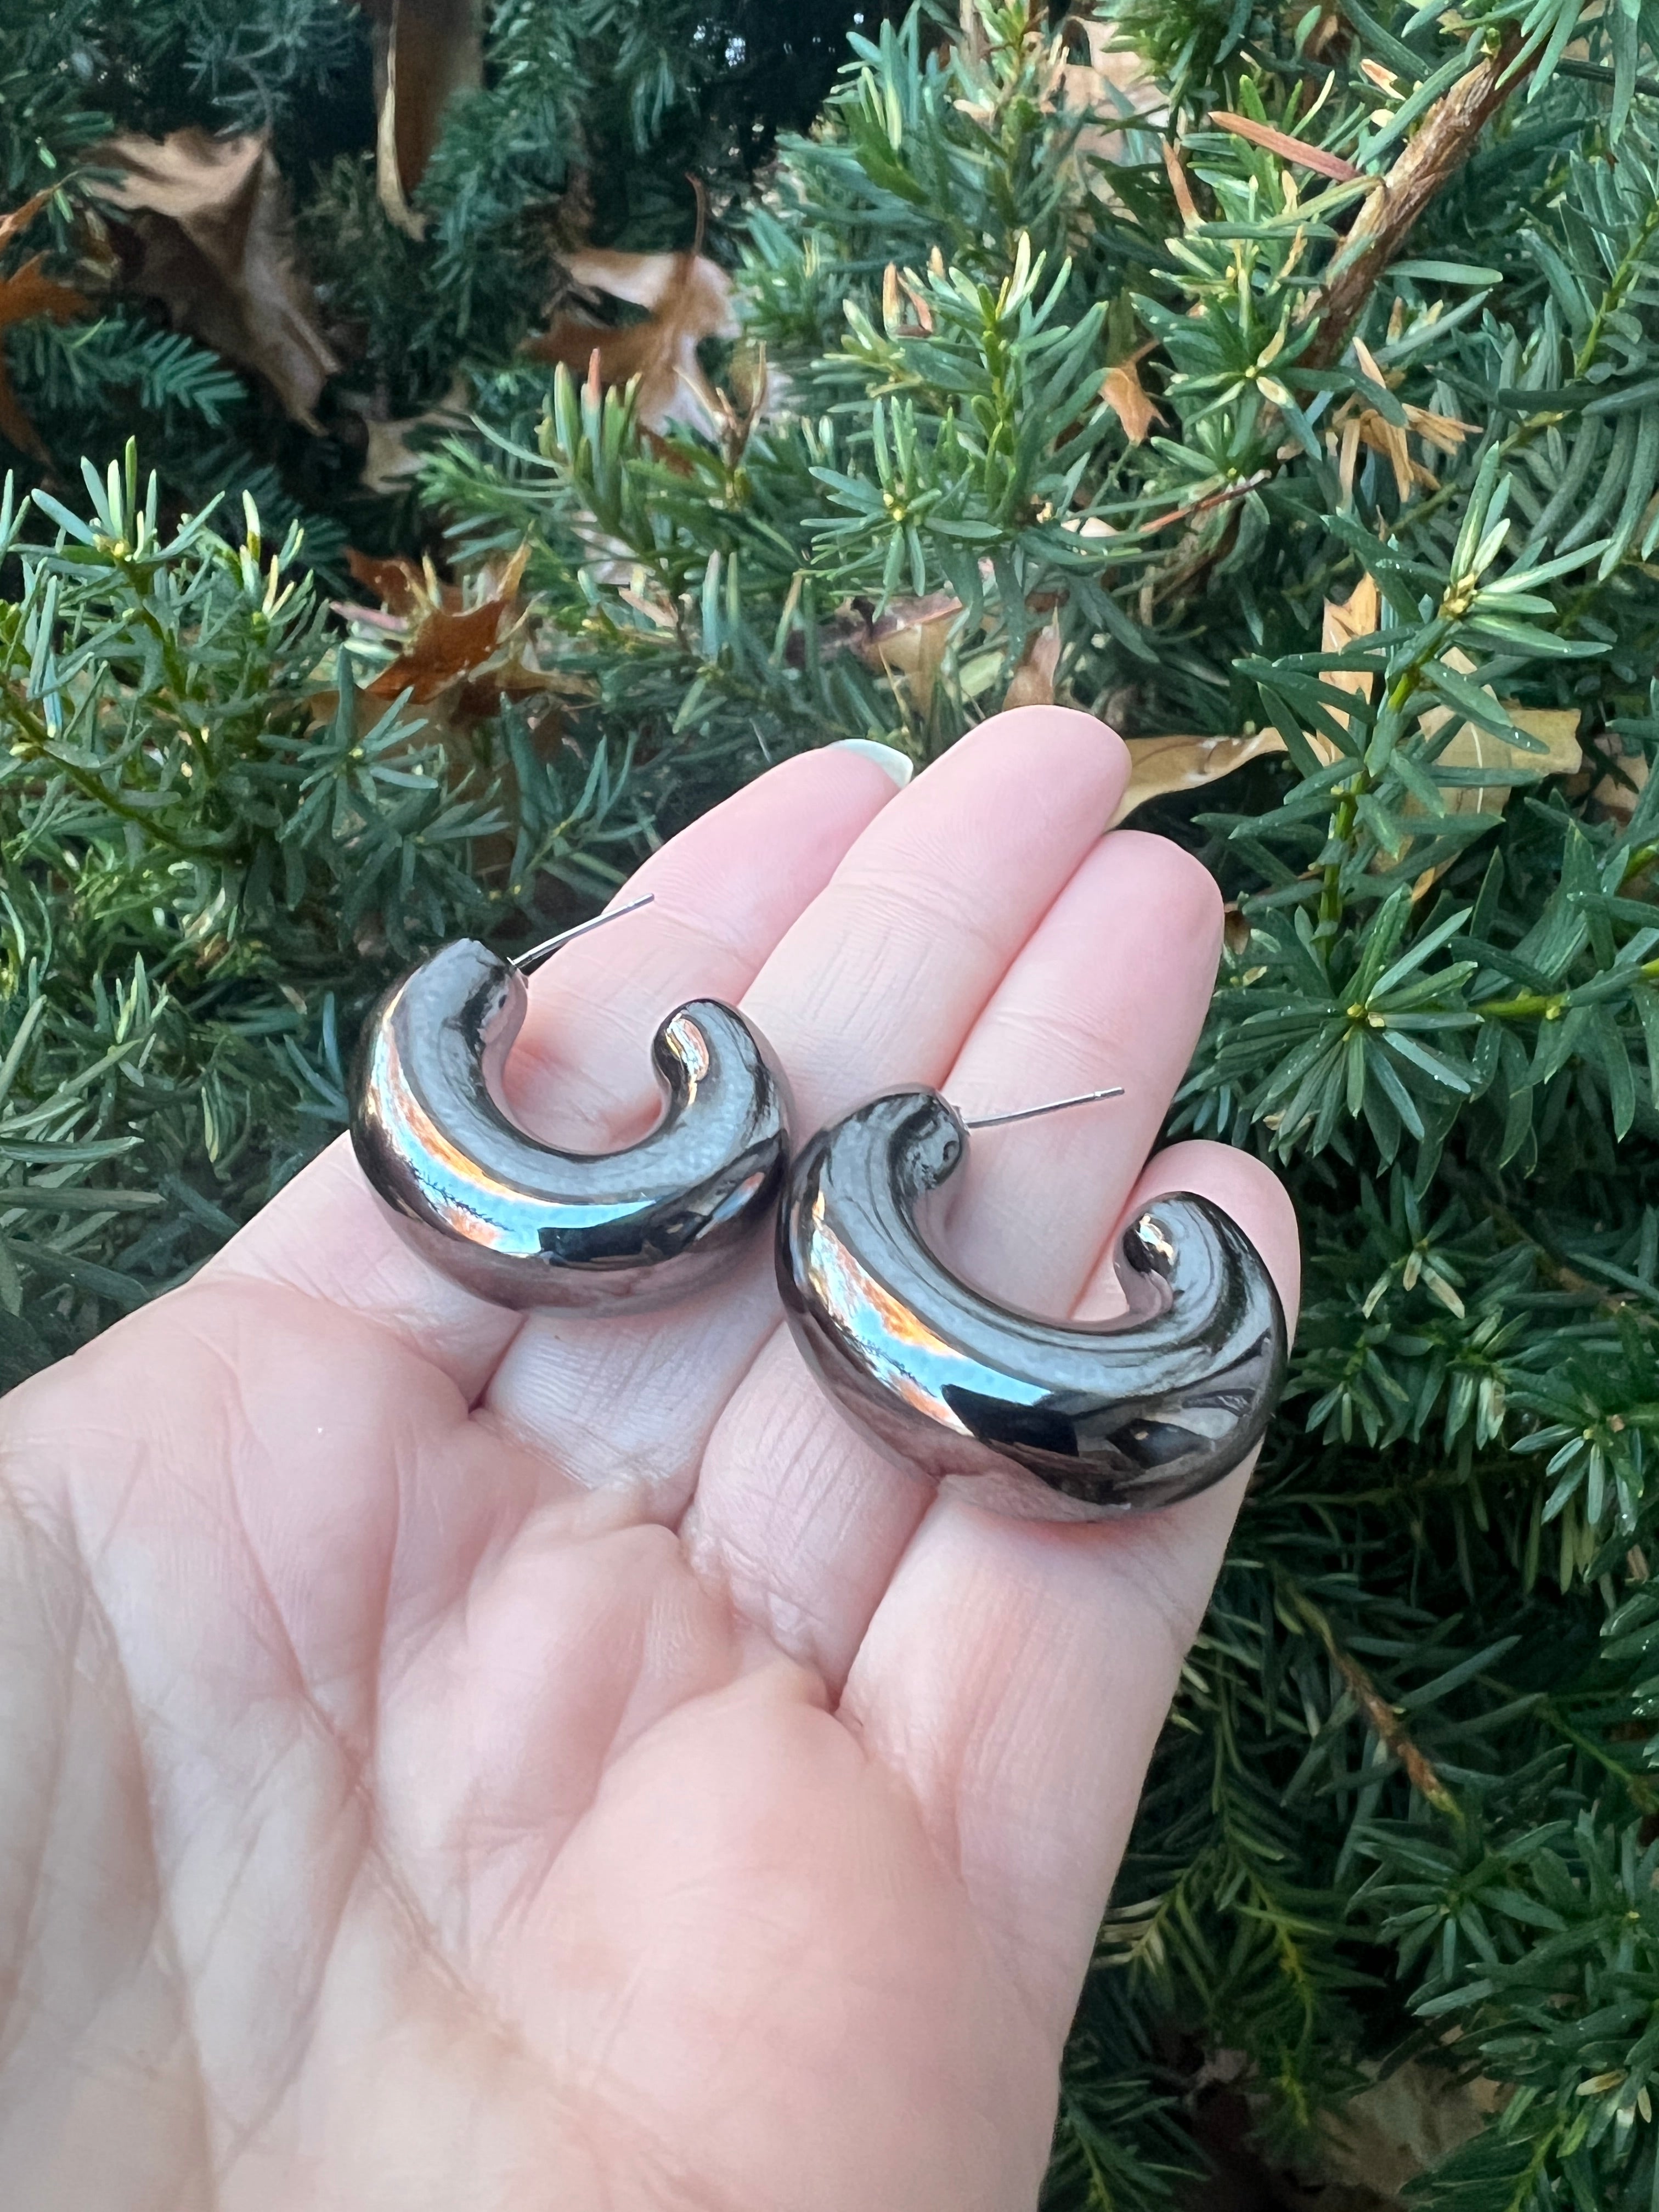 Gunmetal Chrome Acrylic Hoop Earrings